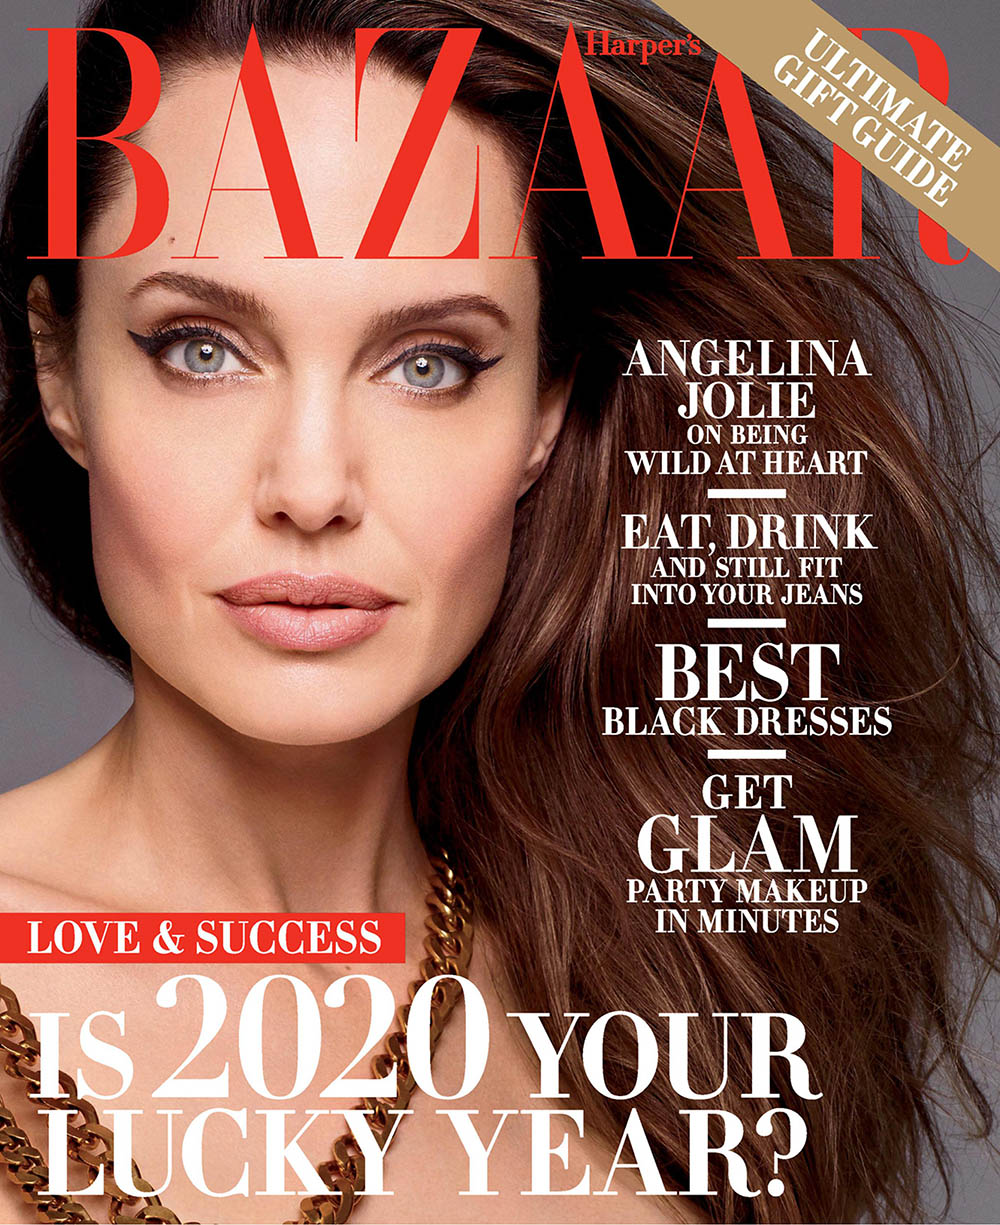 Angelina Jolie covers Harper’s Bazaar US December 2019 January 2020 by Sølve Sundsbø